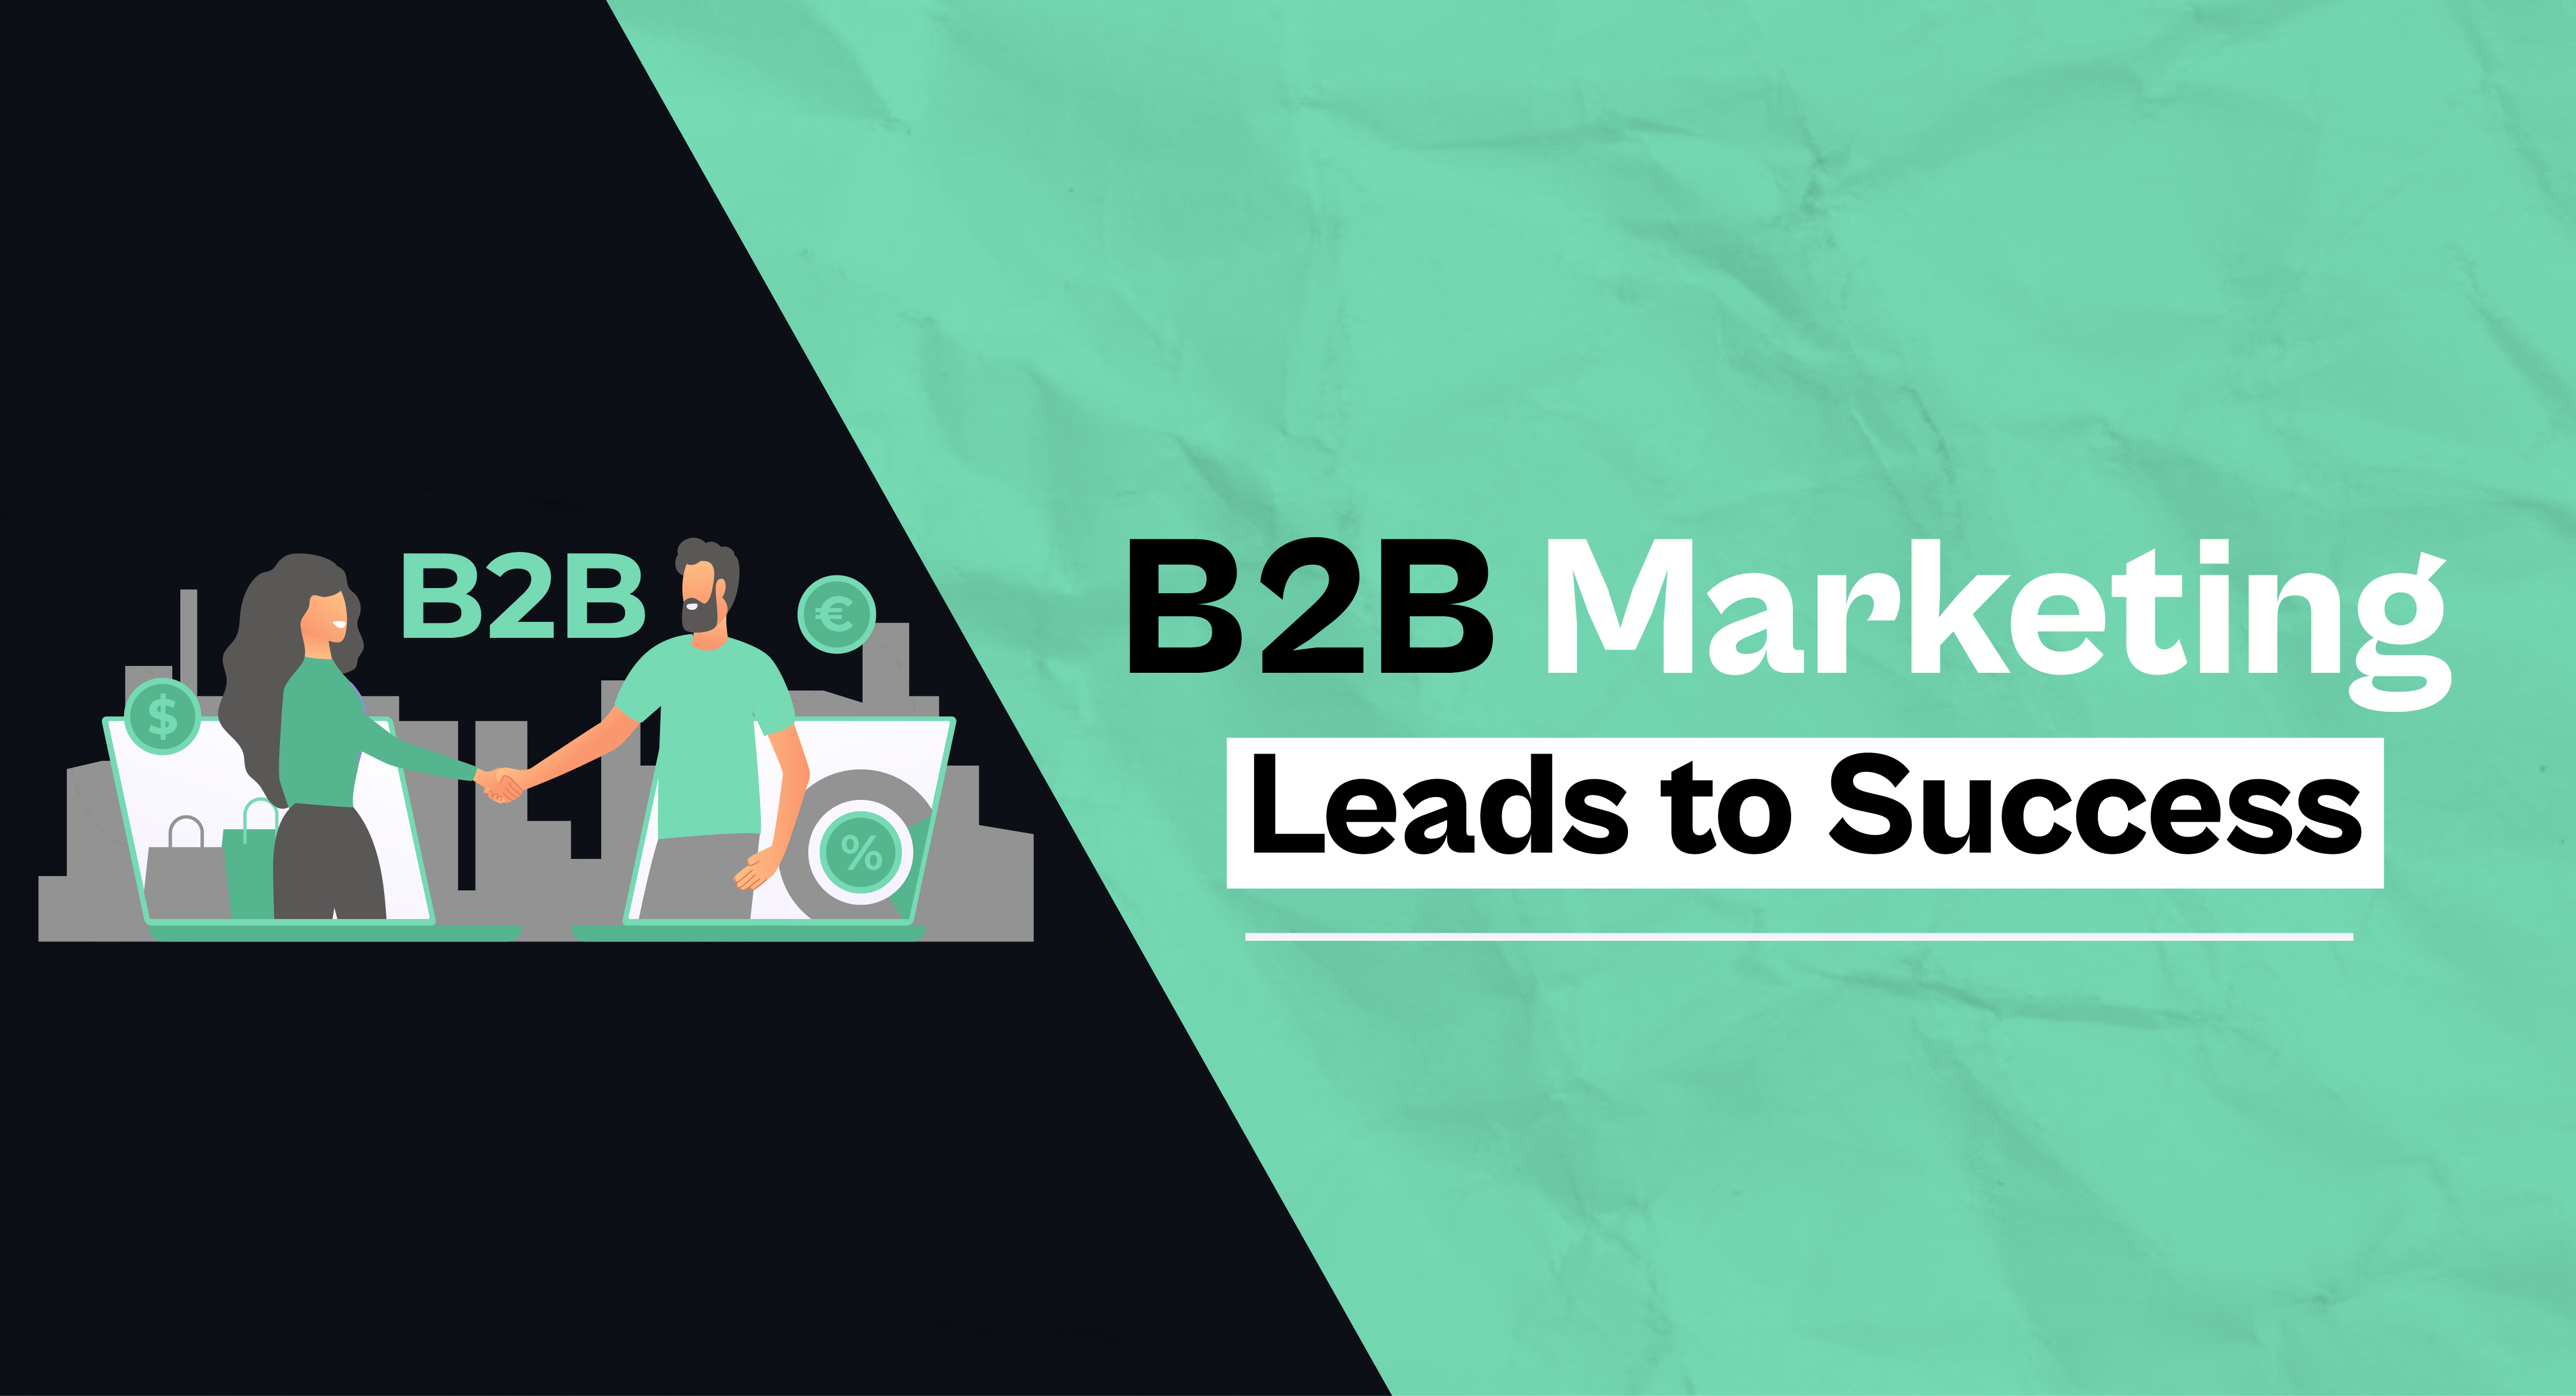 B2B Marketing leads to success